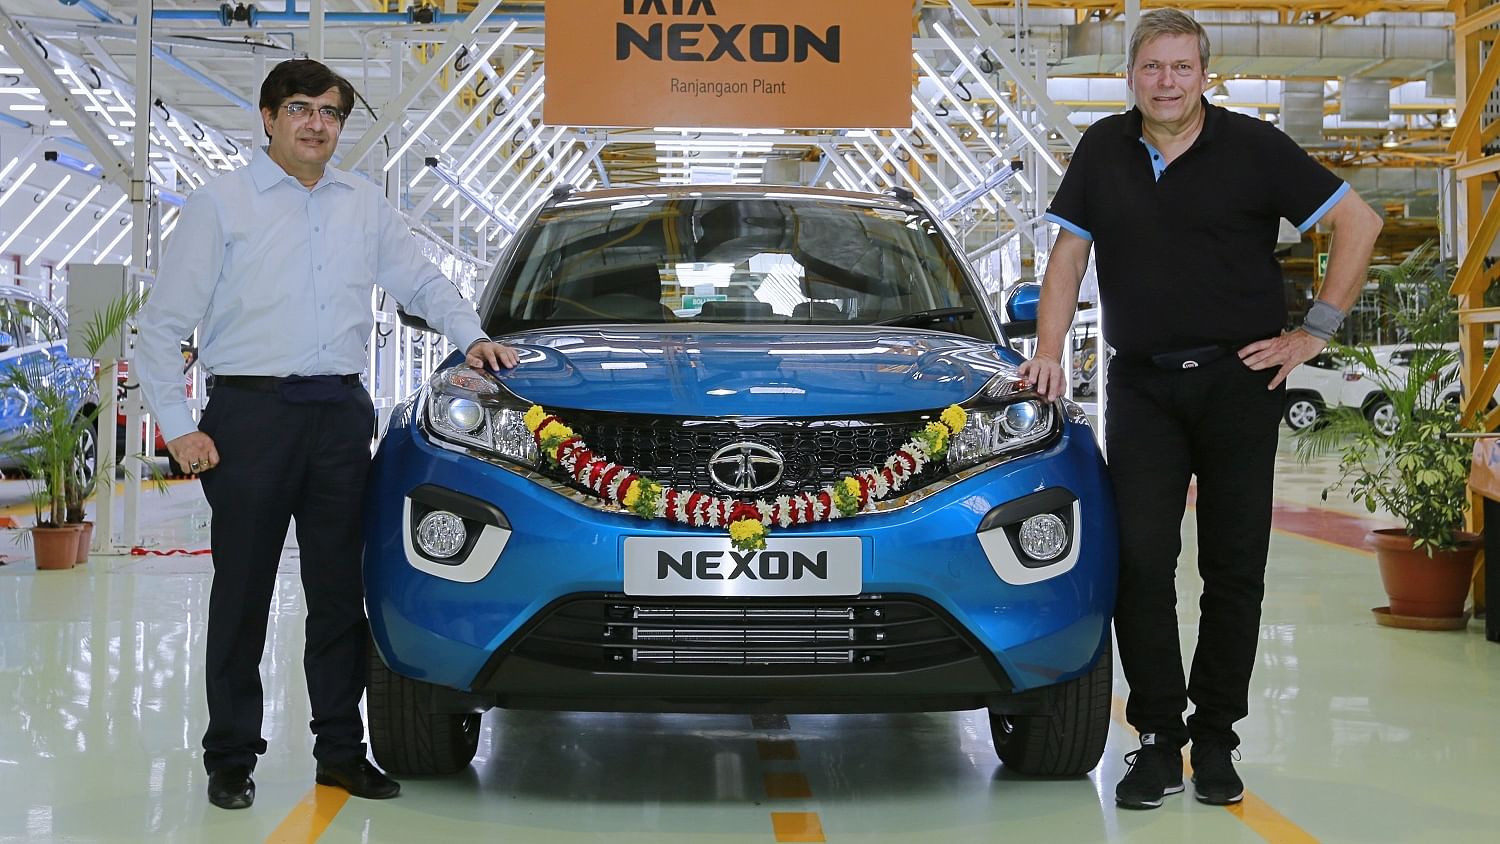 Tata Motors has begun production of the Nexon compact SUV